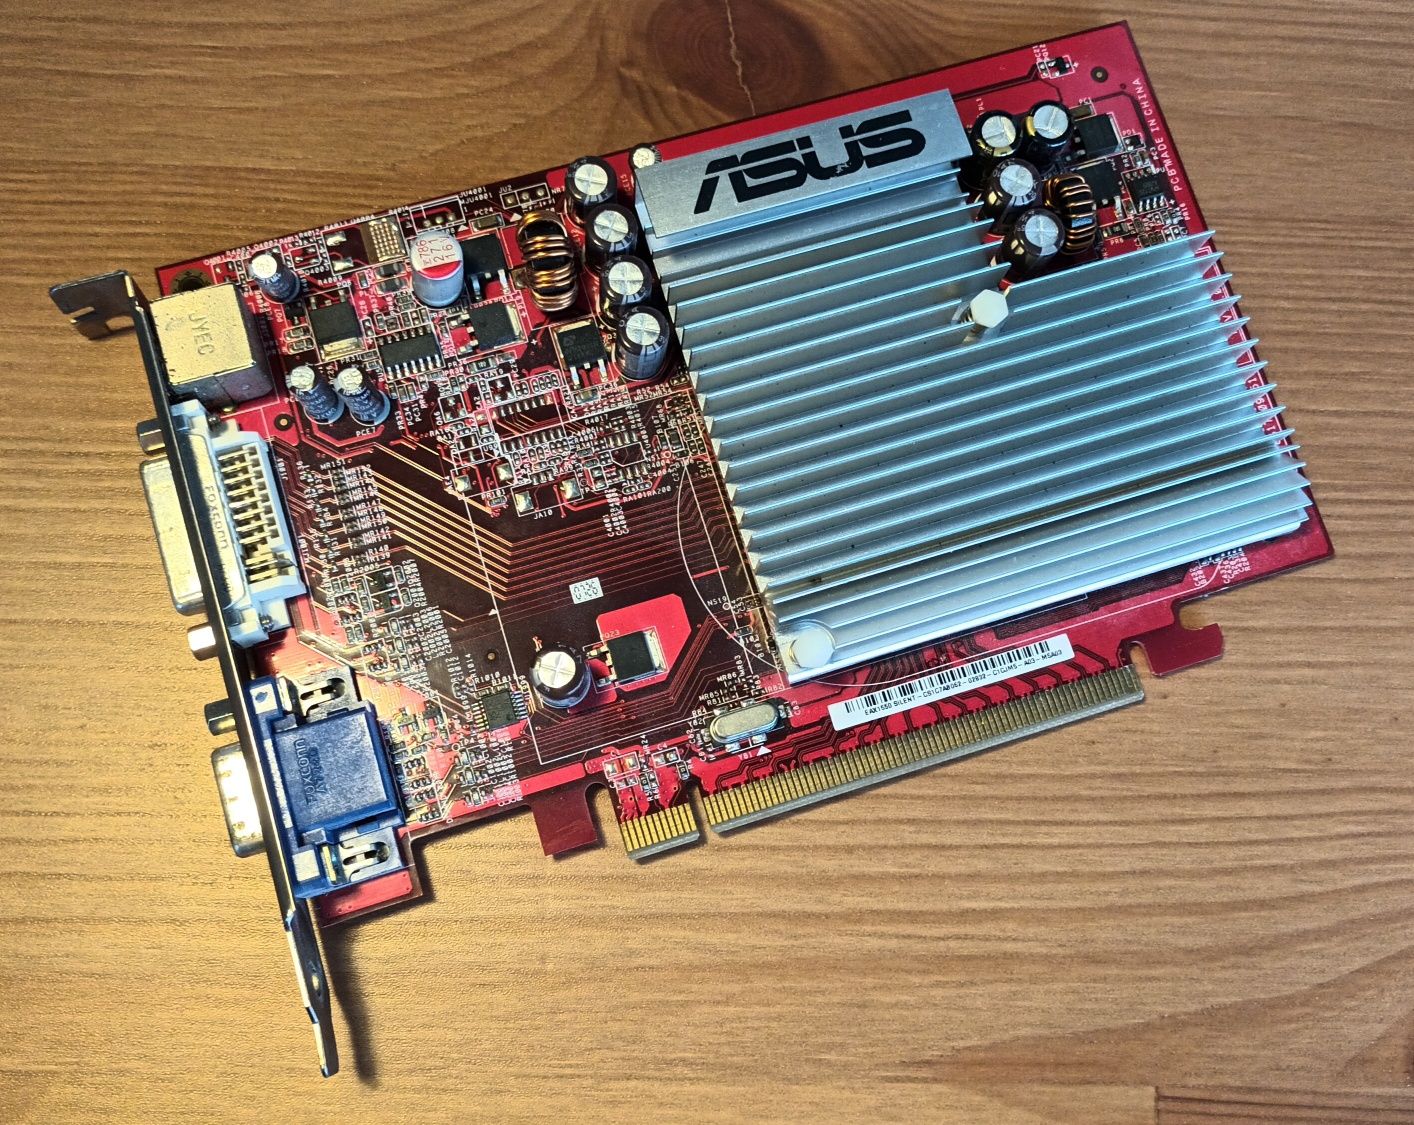 Placa gráfica PCIE Asus Radeon X1550 com 512 Mb de DDR2